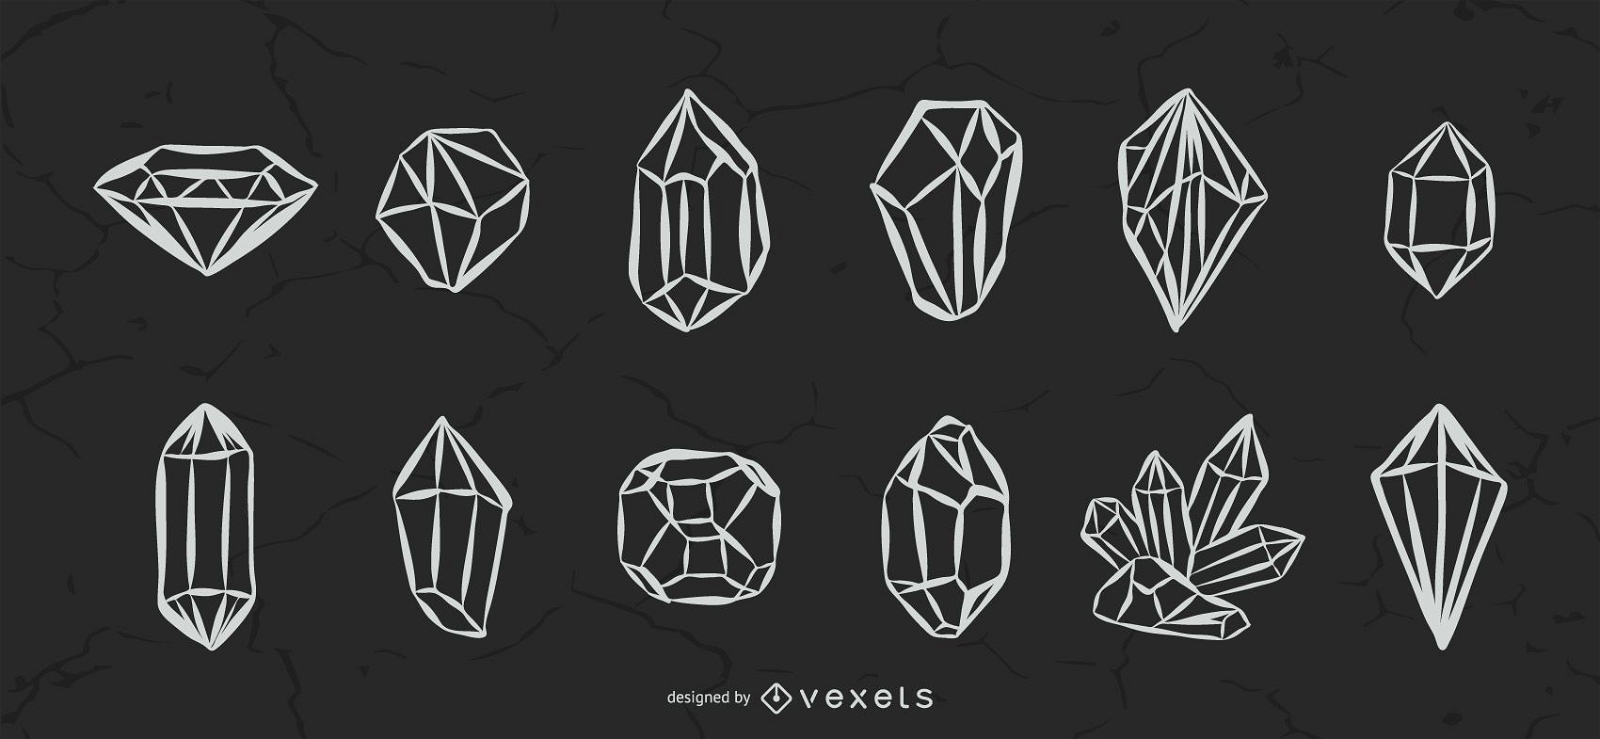 Illustrated Crystals Set